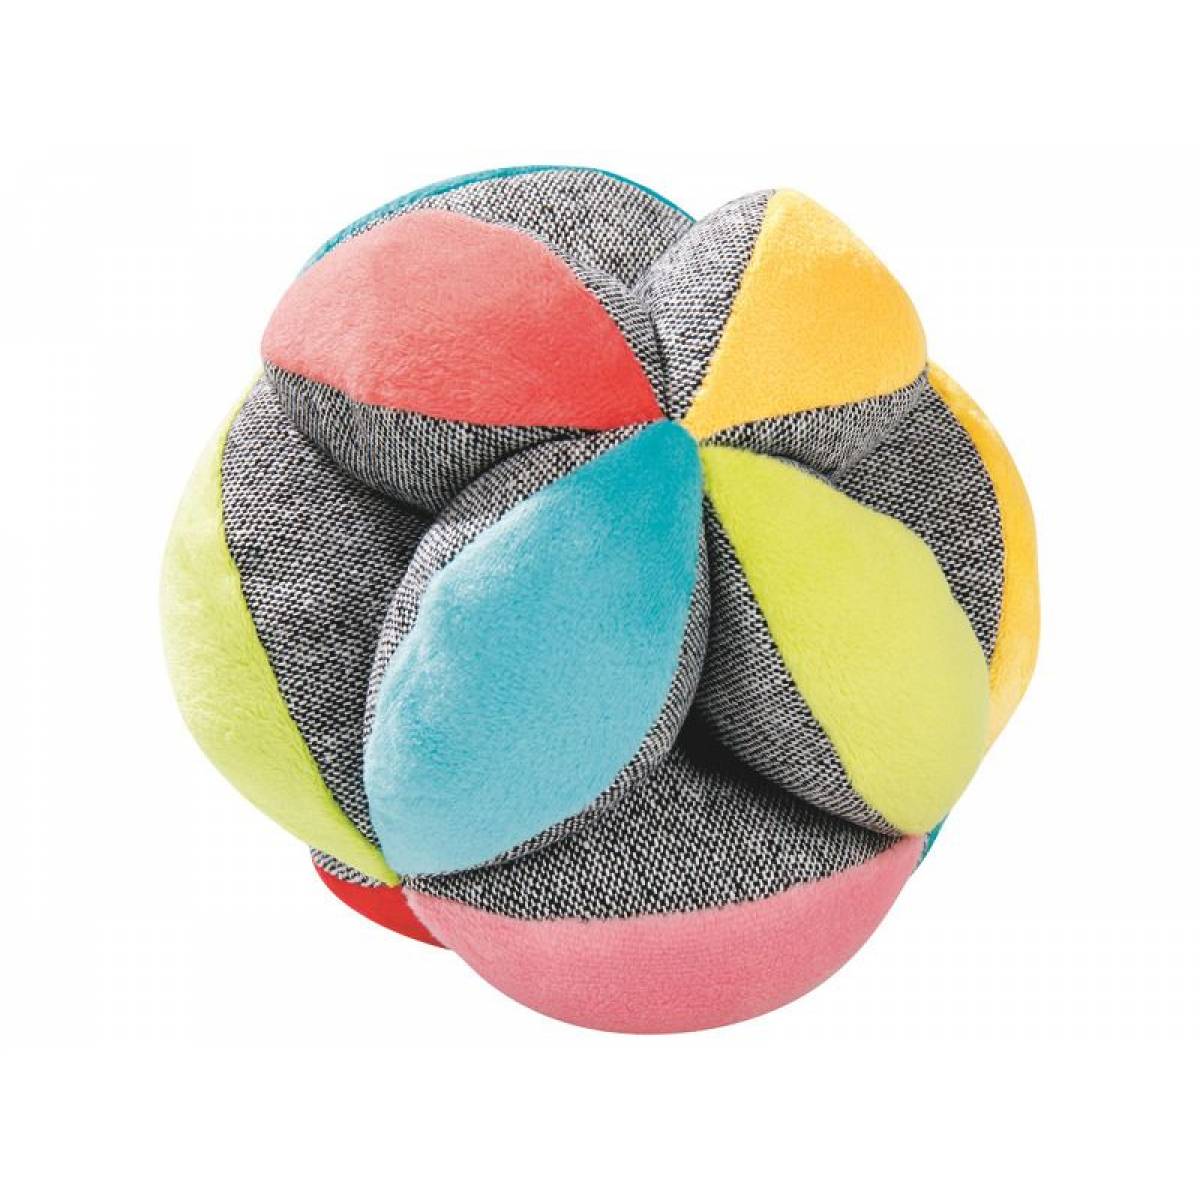 Gripper Ball - Montessori inspired